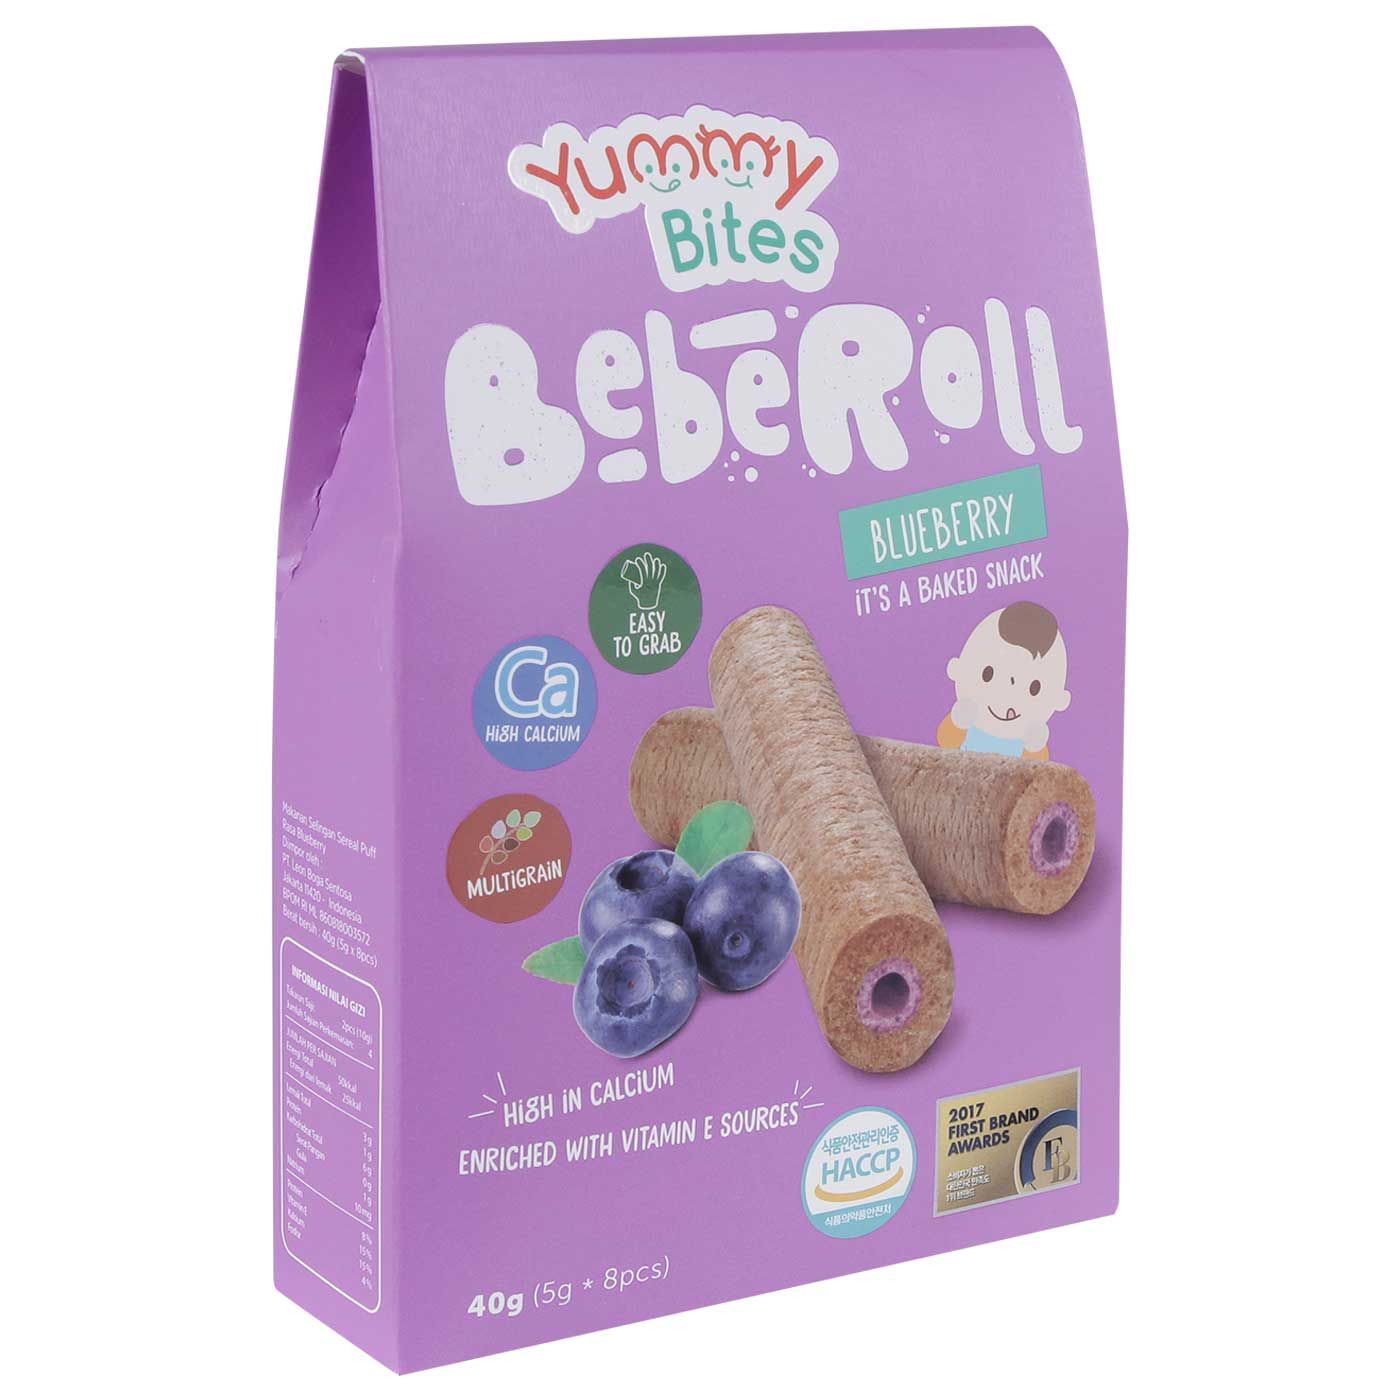 Yummy Bites Beberoll Blueberry 40gr - 2